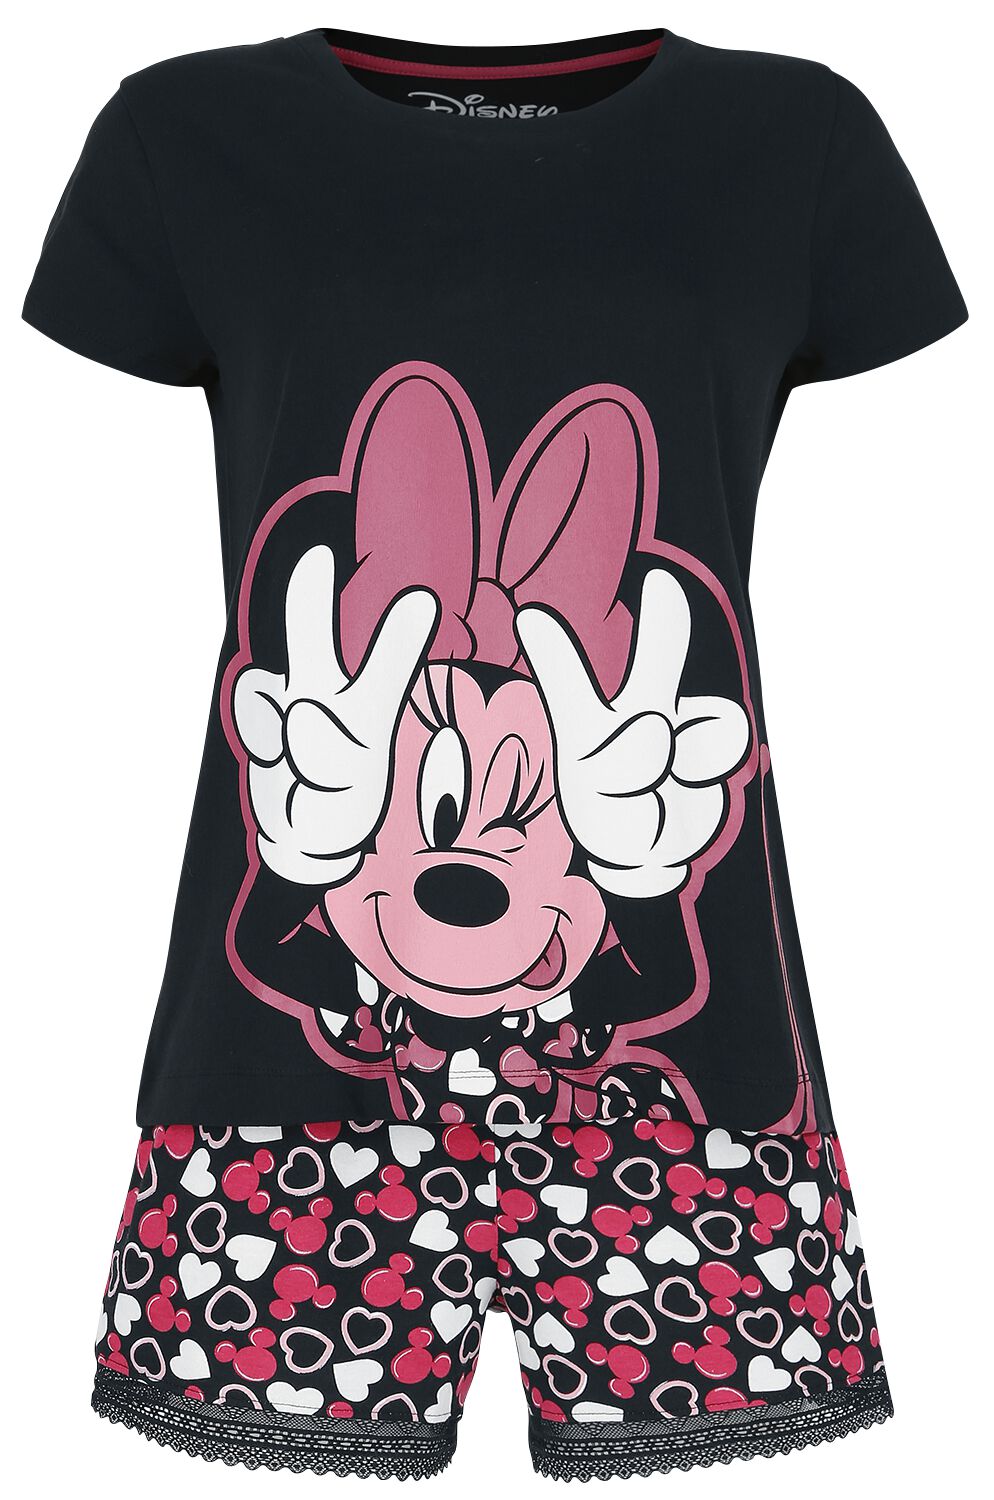 Pyjama Disney de Mickey & Minnie Mouse - Minnie - S à M - pour Femme - allover